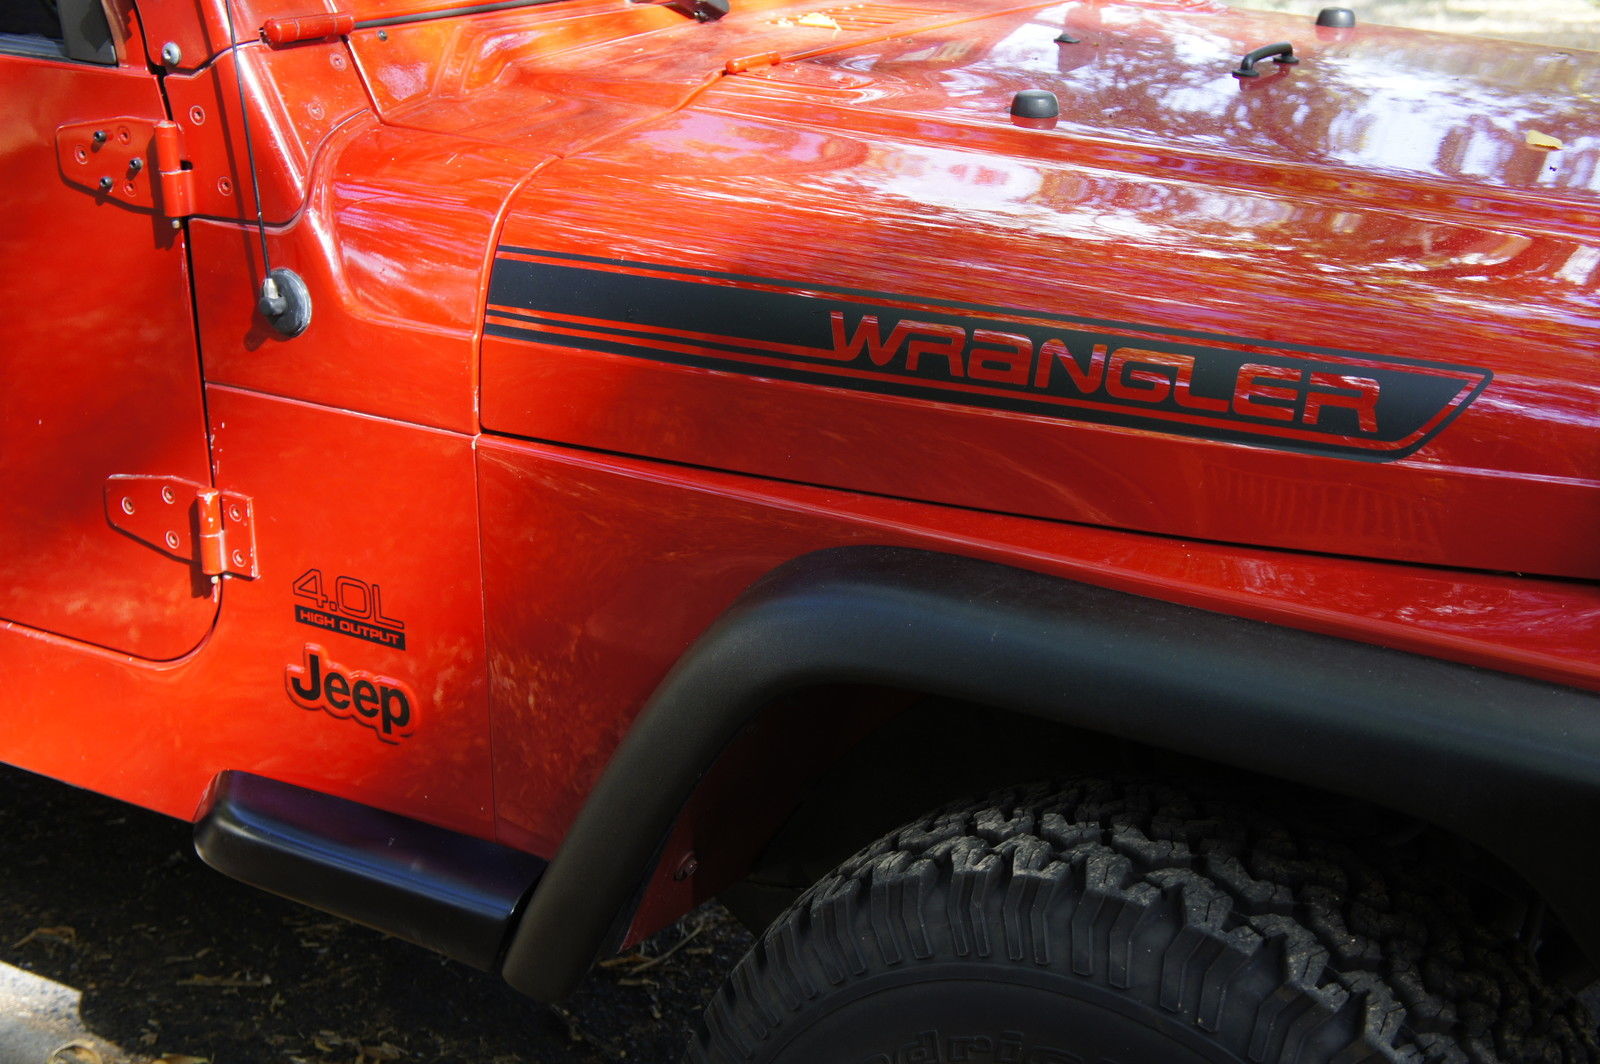 Jeep Wrangler Rubicon replica hood decals